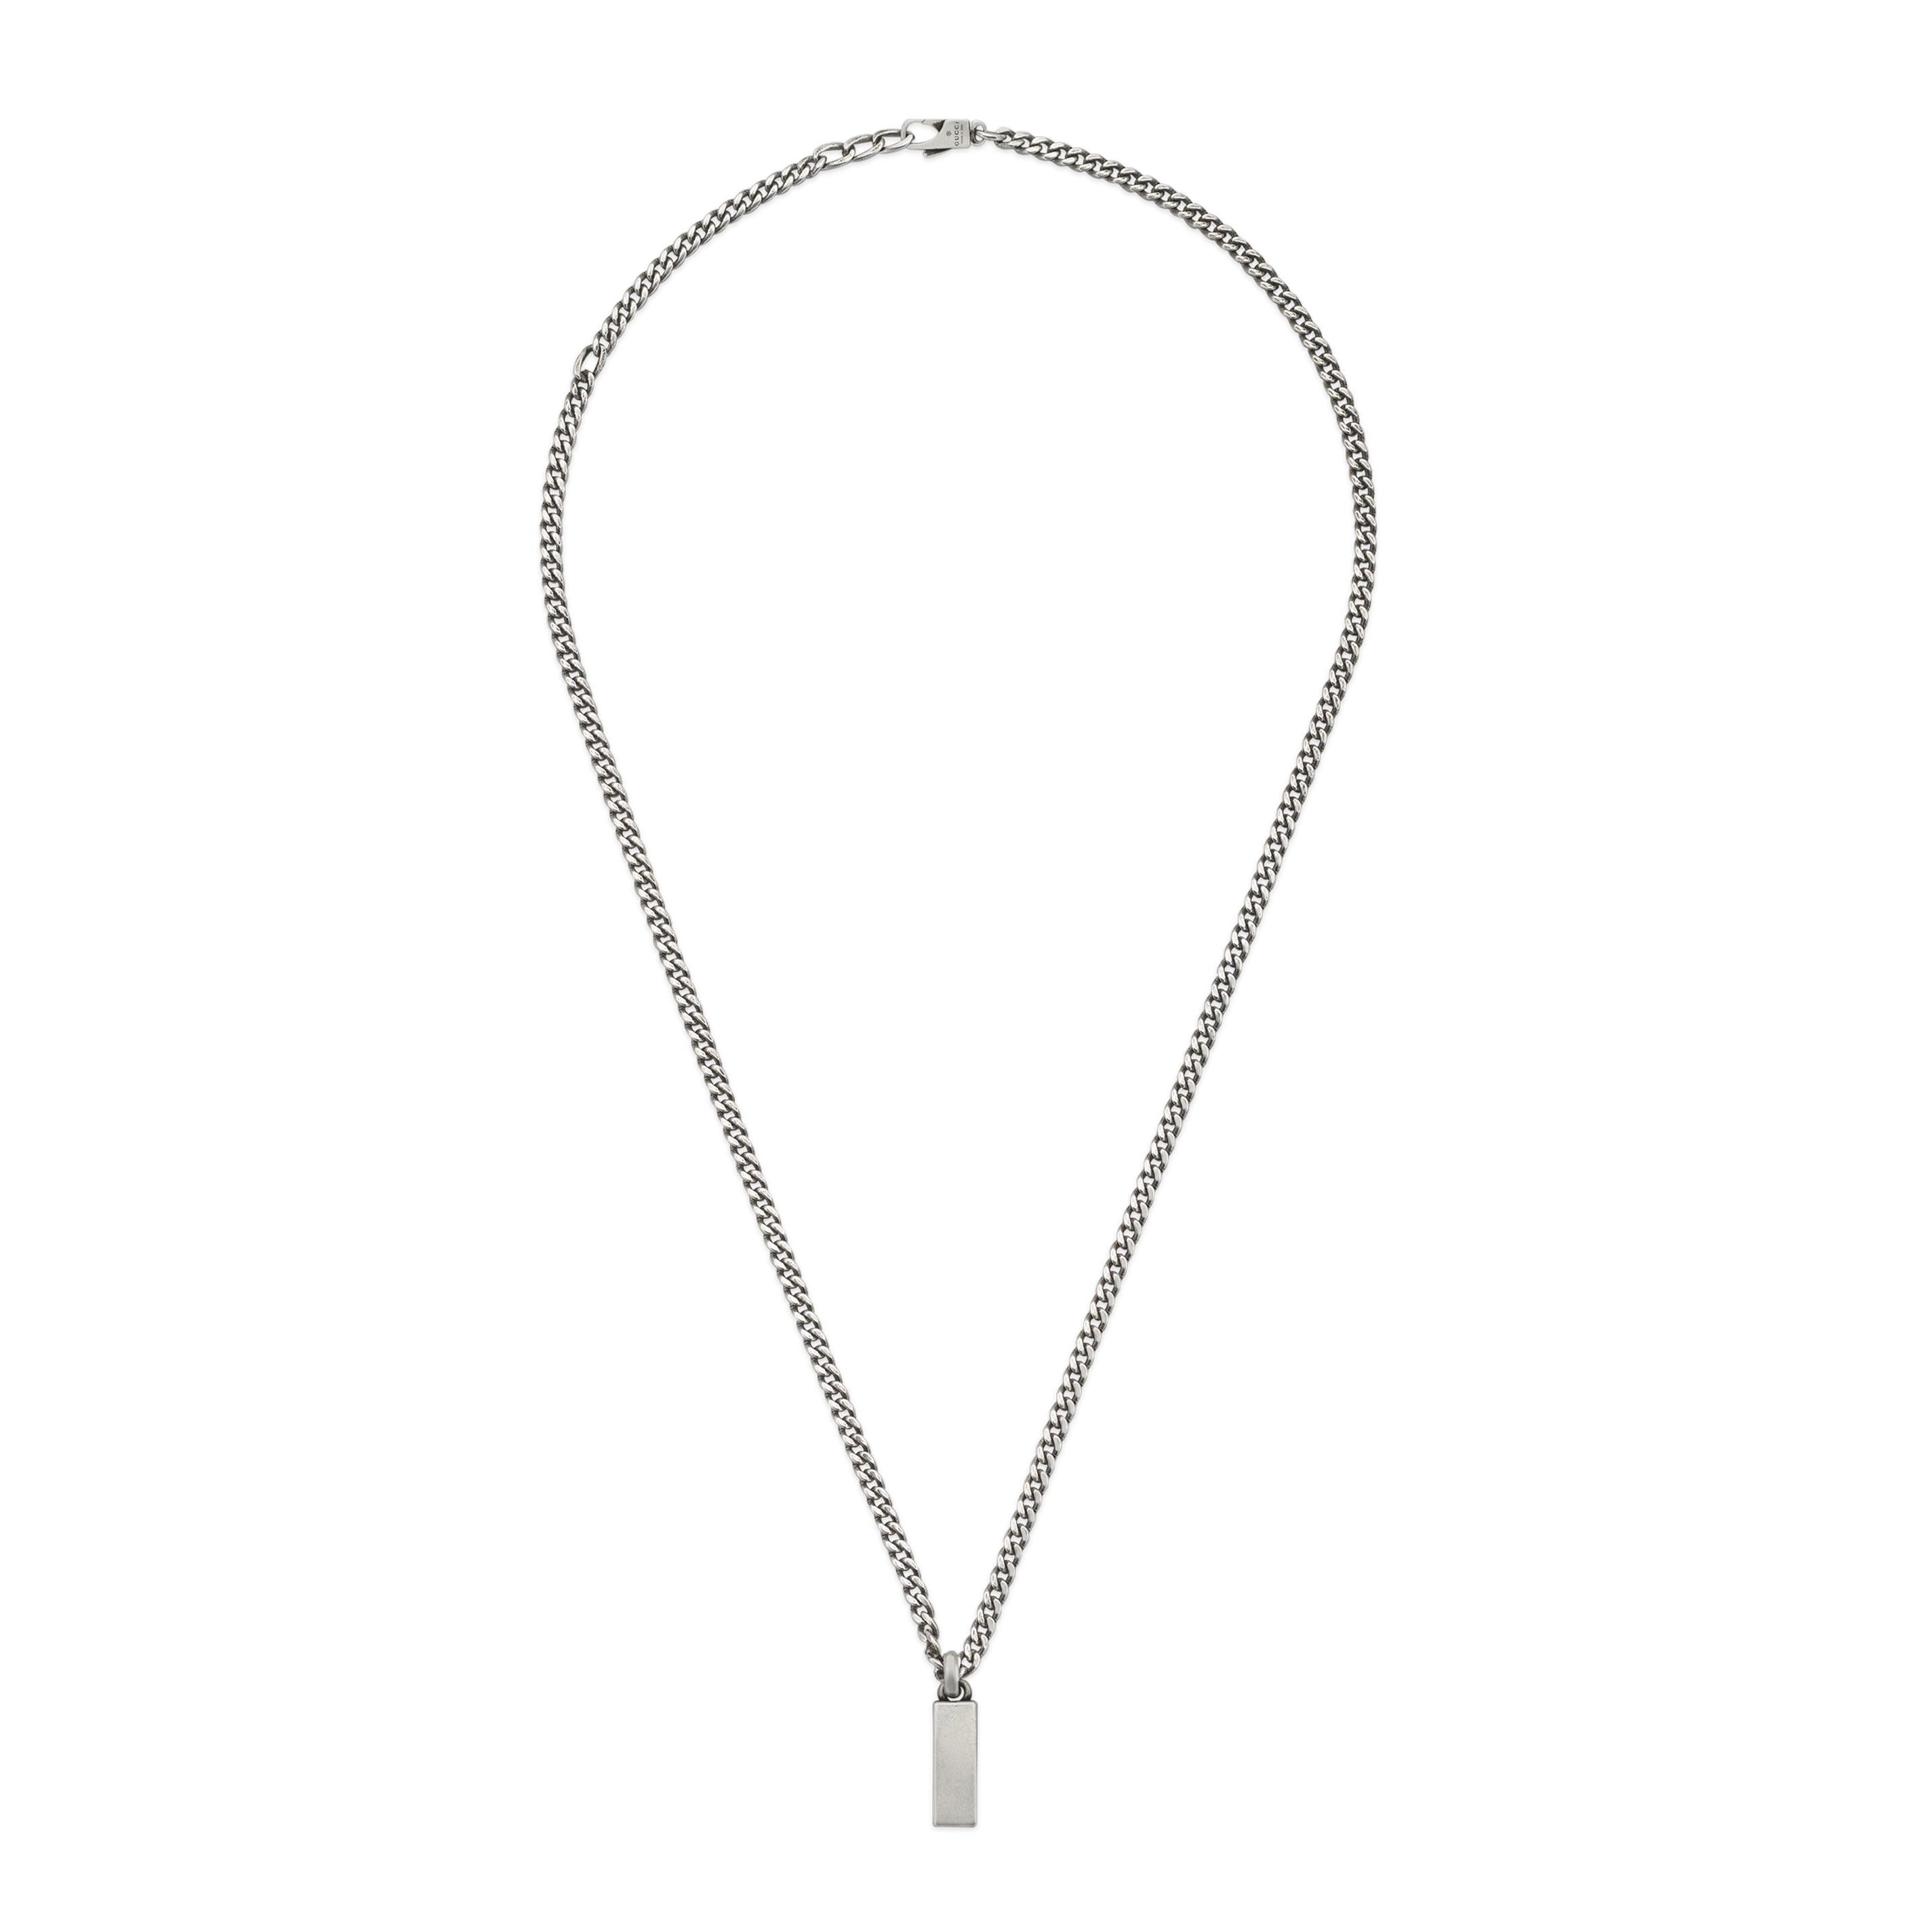 Necklace with Enamel Pendant